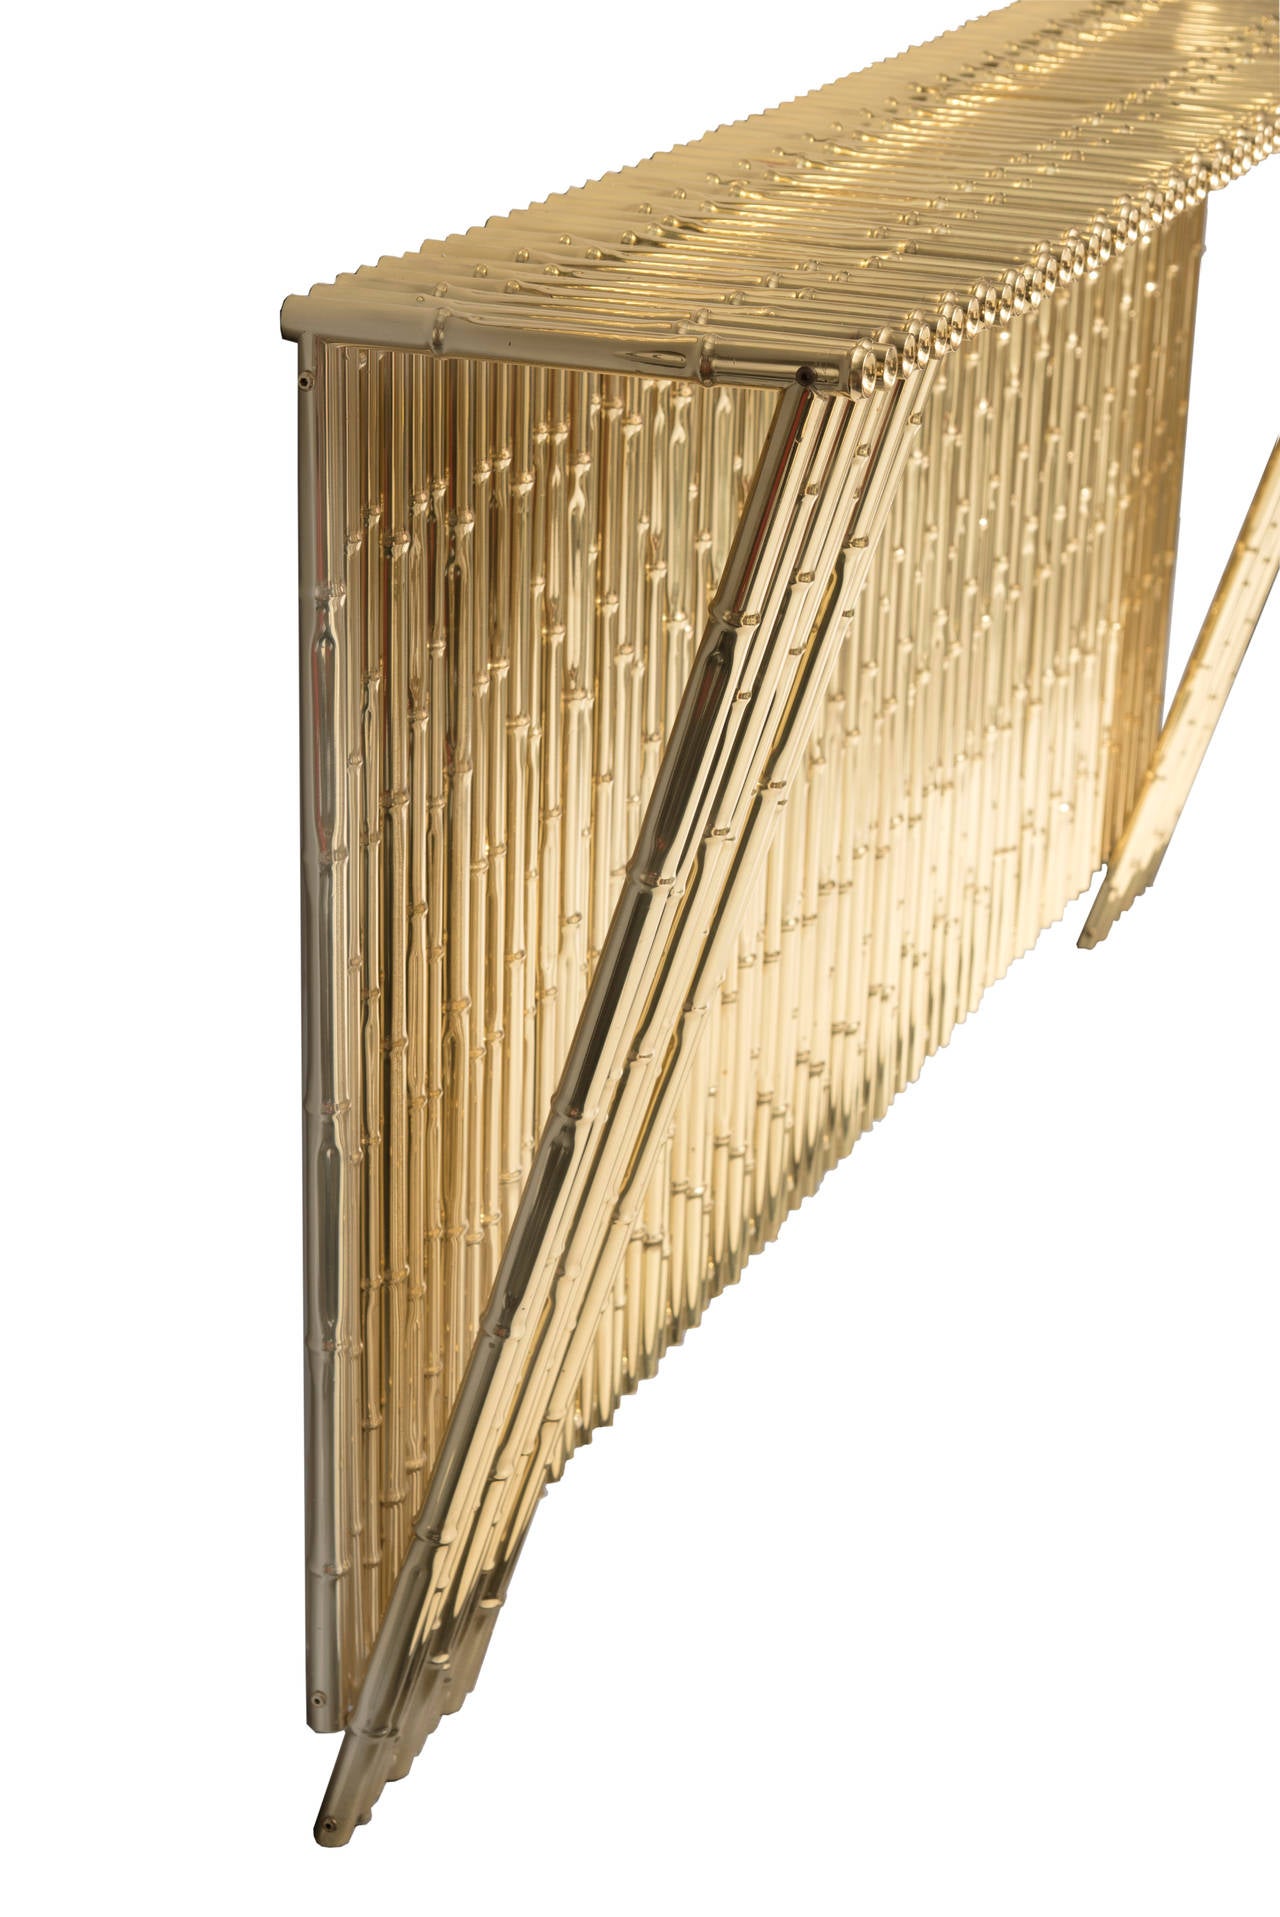 Ferruccio Laviani,
console,
gold-plated brass bamboo, unique piece,
circa 2010, Italy.
Measure: Height: 1 m, width: 187 cm, depth: 33 cm.

Provenance: Famous restaurant 